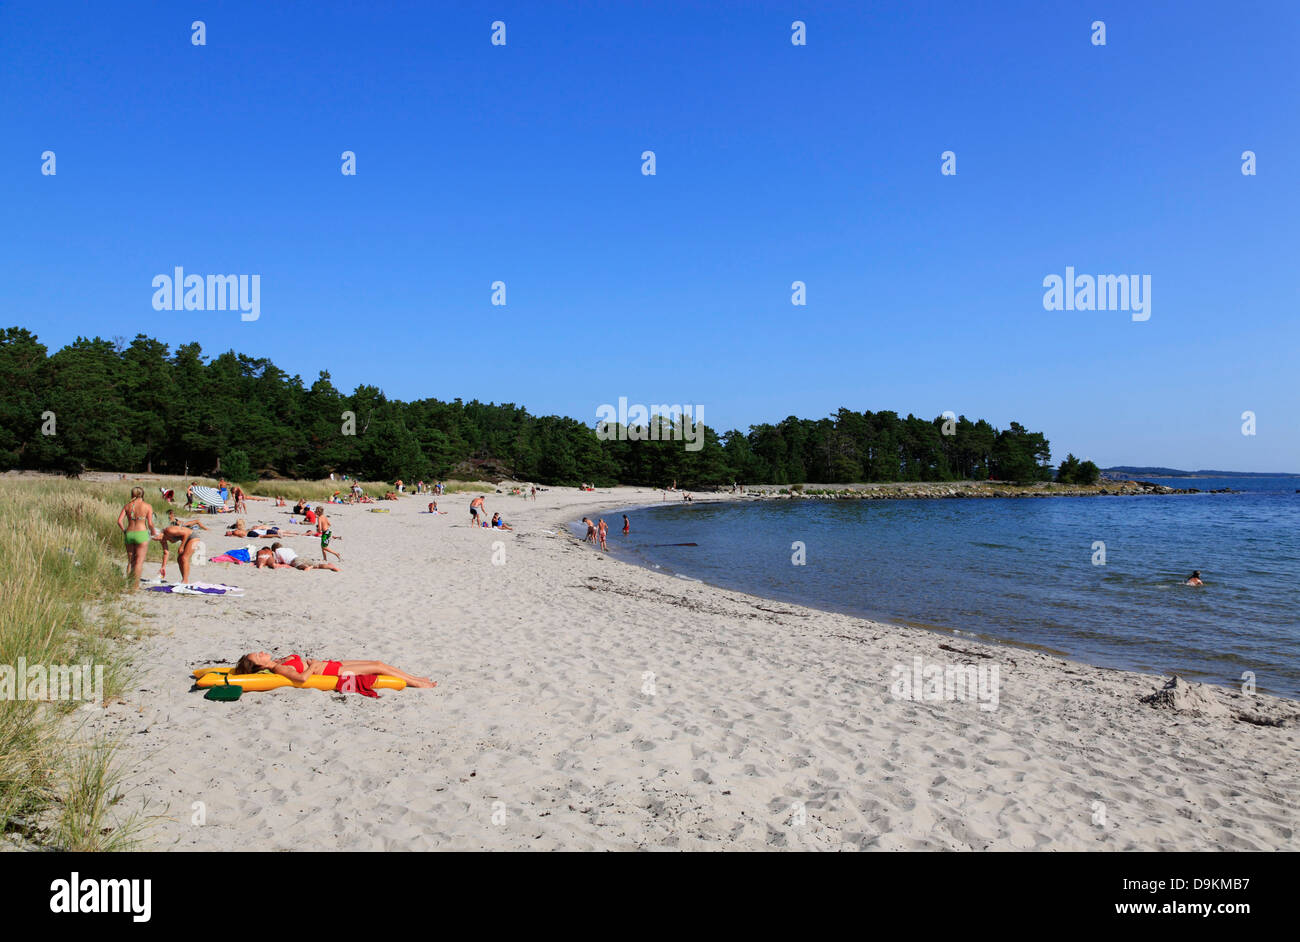 Storsand beach, Nattaroe Island, Stockholm Archipelago, baltic sea coast, Sweden, Scandinavia Stock Photo